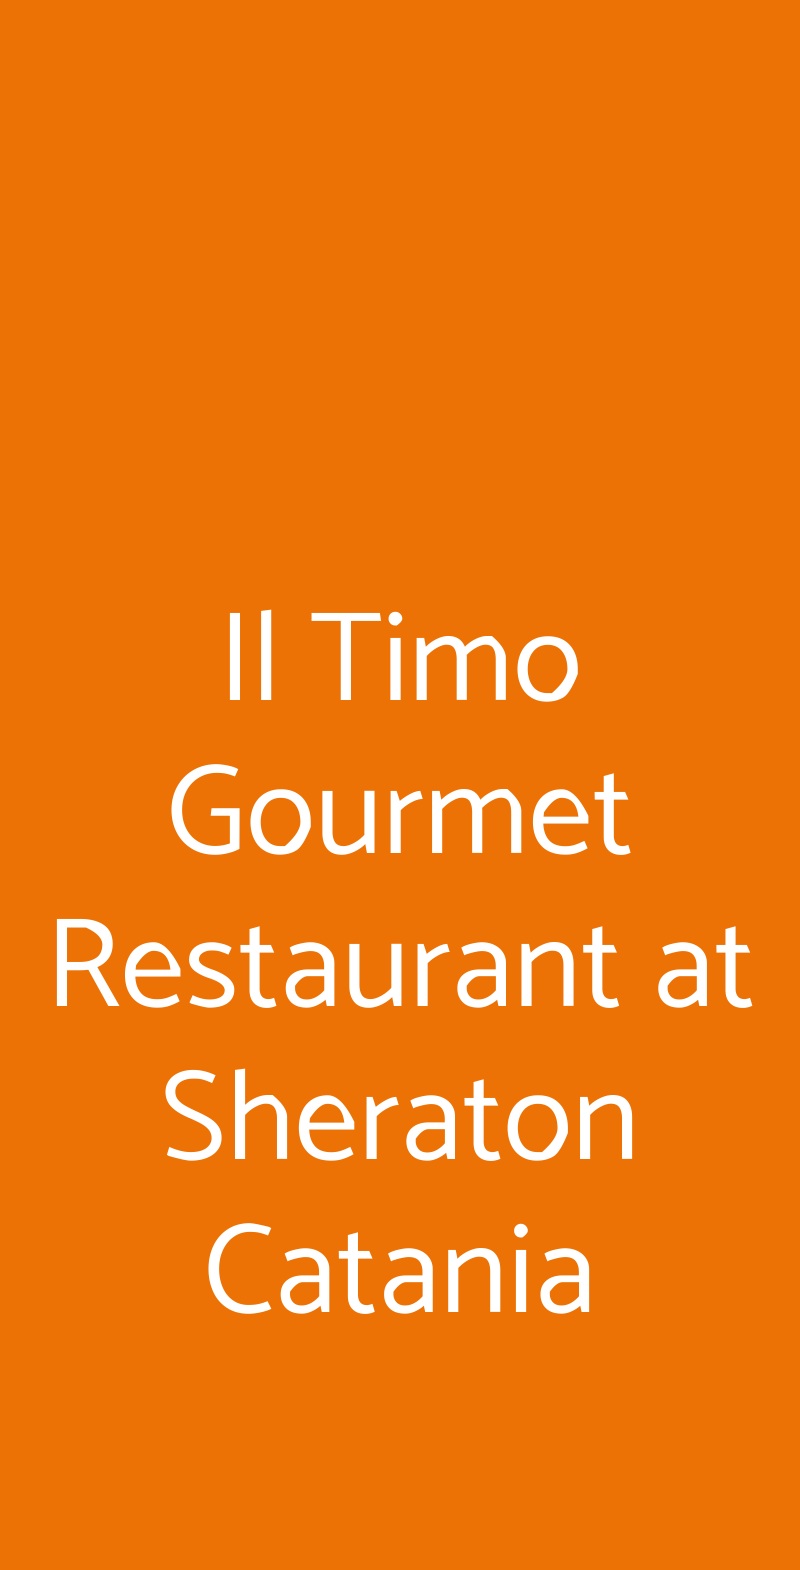 Il Timo Gourmet Restaurant at Sheraton Catania Aci Castello menù 1 pagina